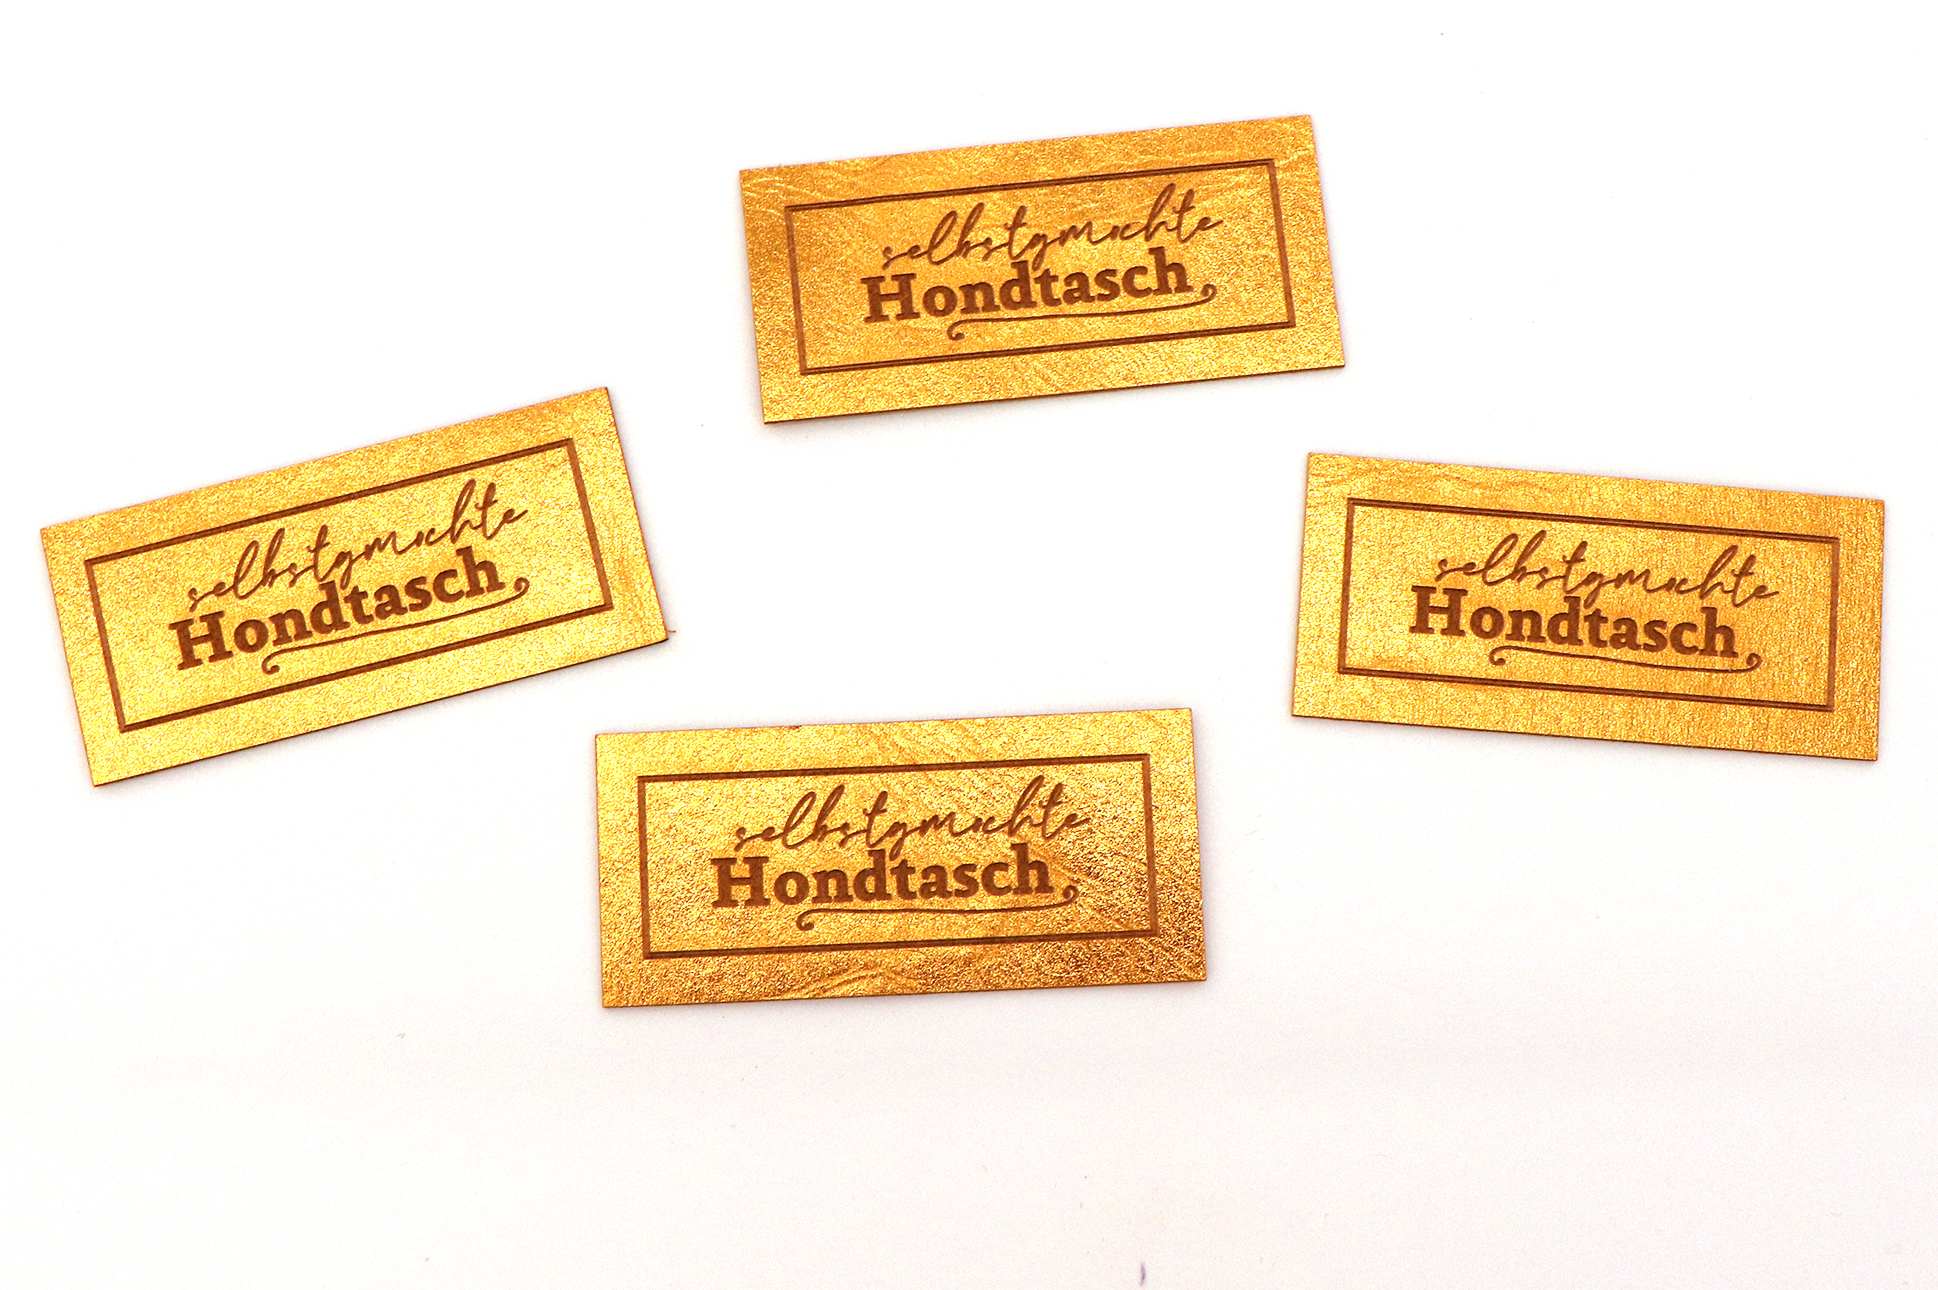 Label, "selbstgmochte Hondtasch" gold